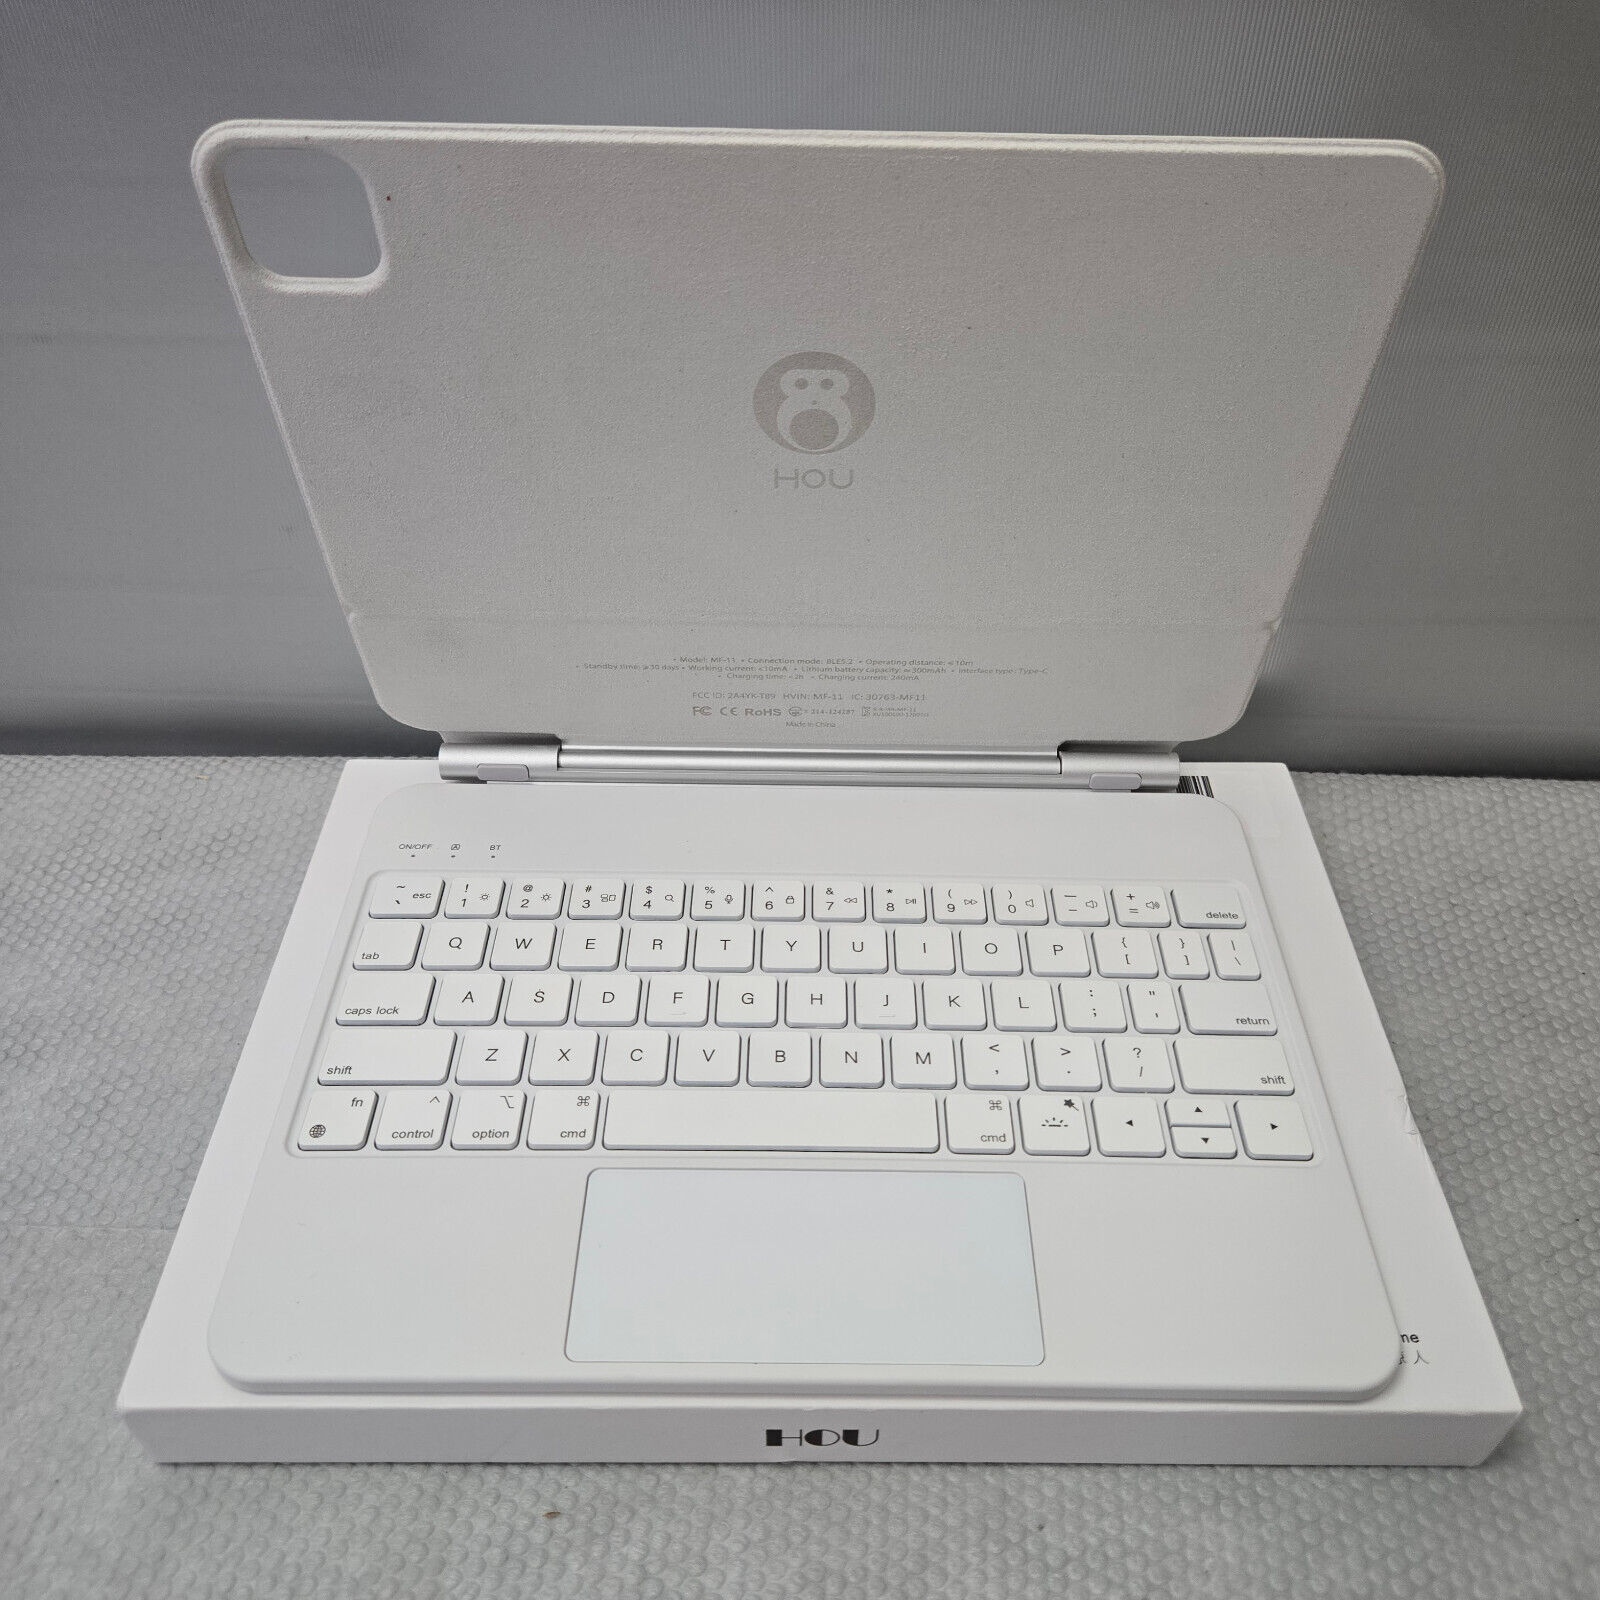 HOU Mf-11 Keyboard Case For IPad Pro - White